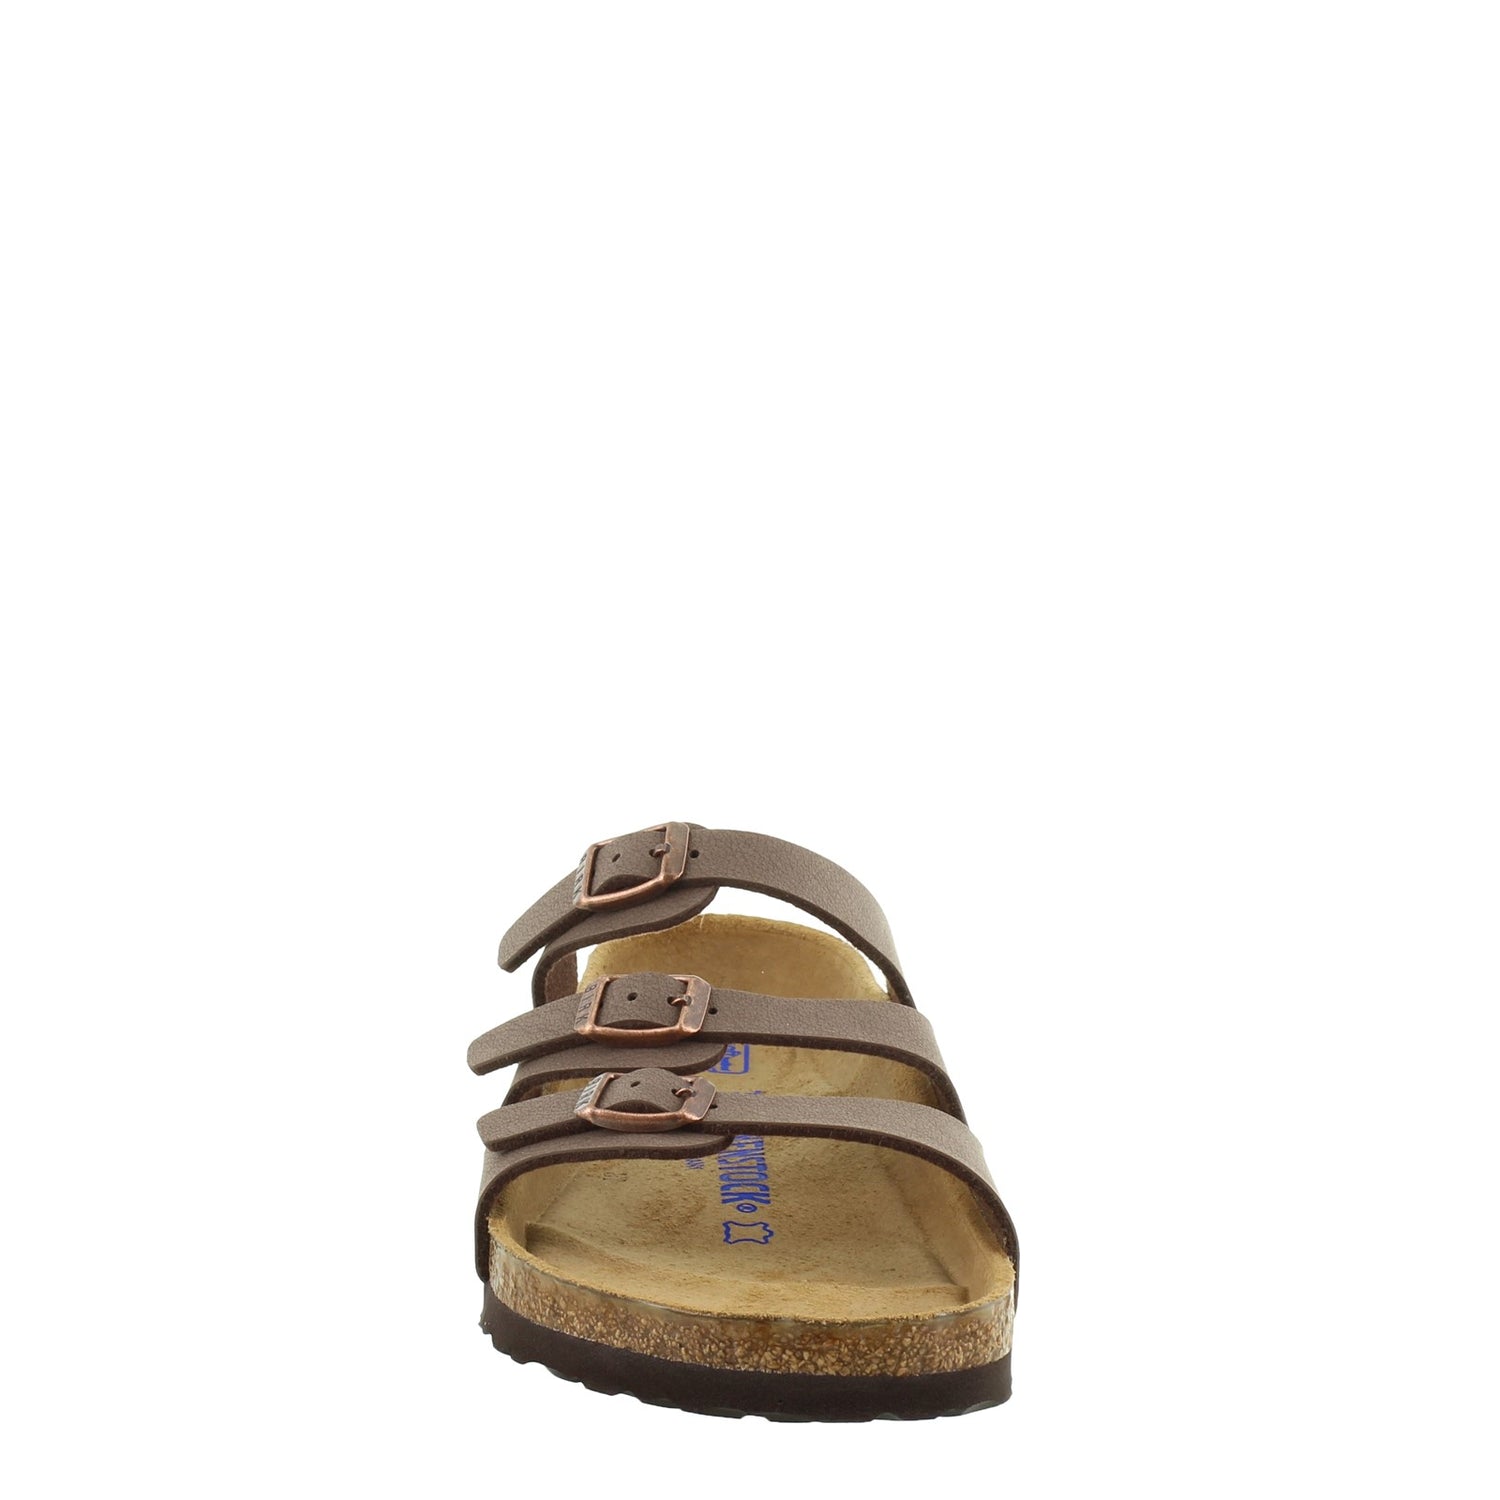 Peltz Shoes  Women's Birkenstock Florida Soft Footbed Sandal MOCHA 5388 1 M